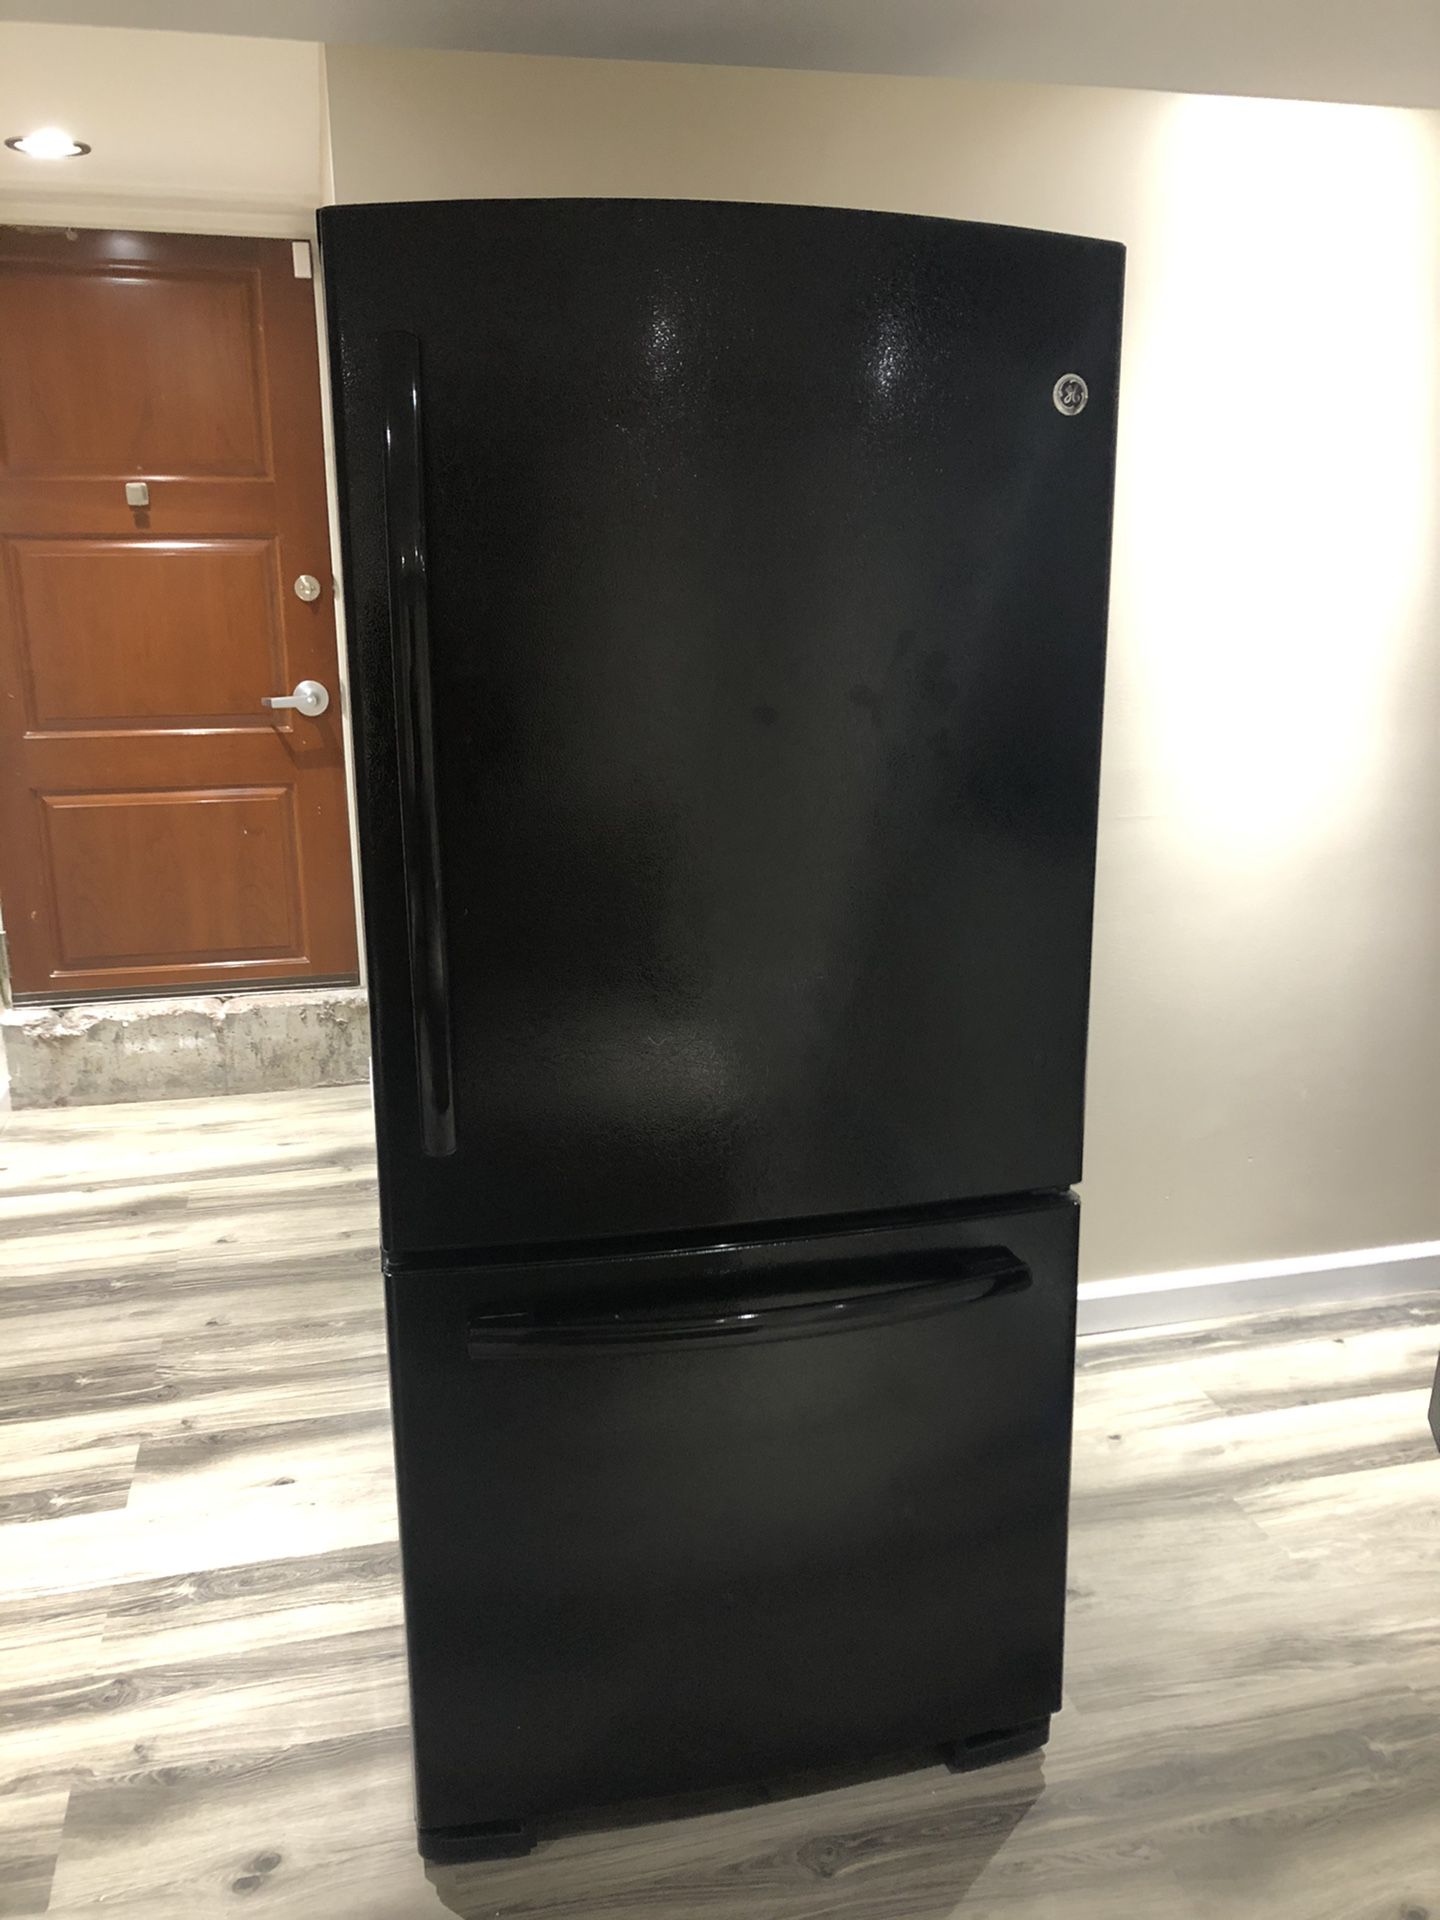 GE® 20.3 Cu. Ft. Bottom-Freezer Refrigerator